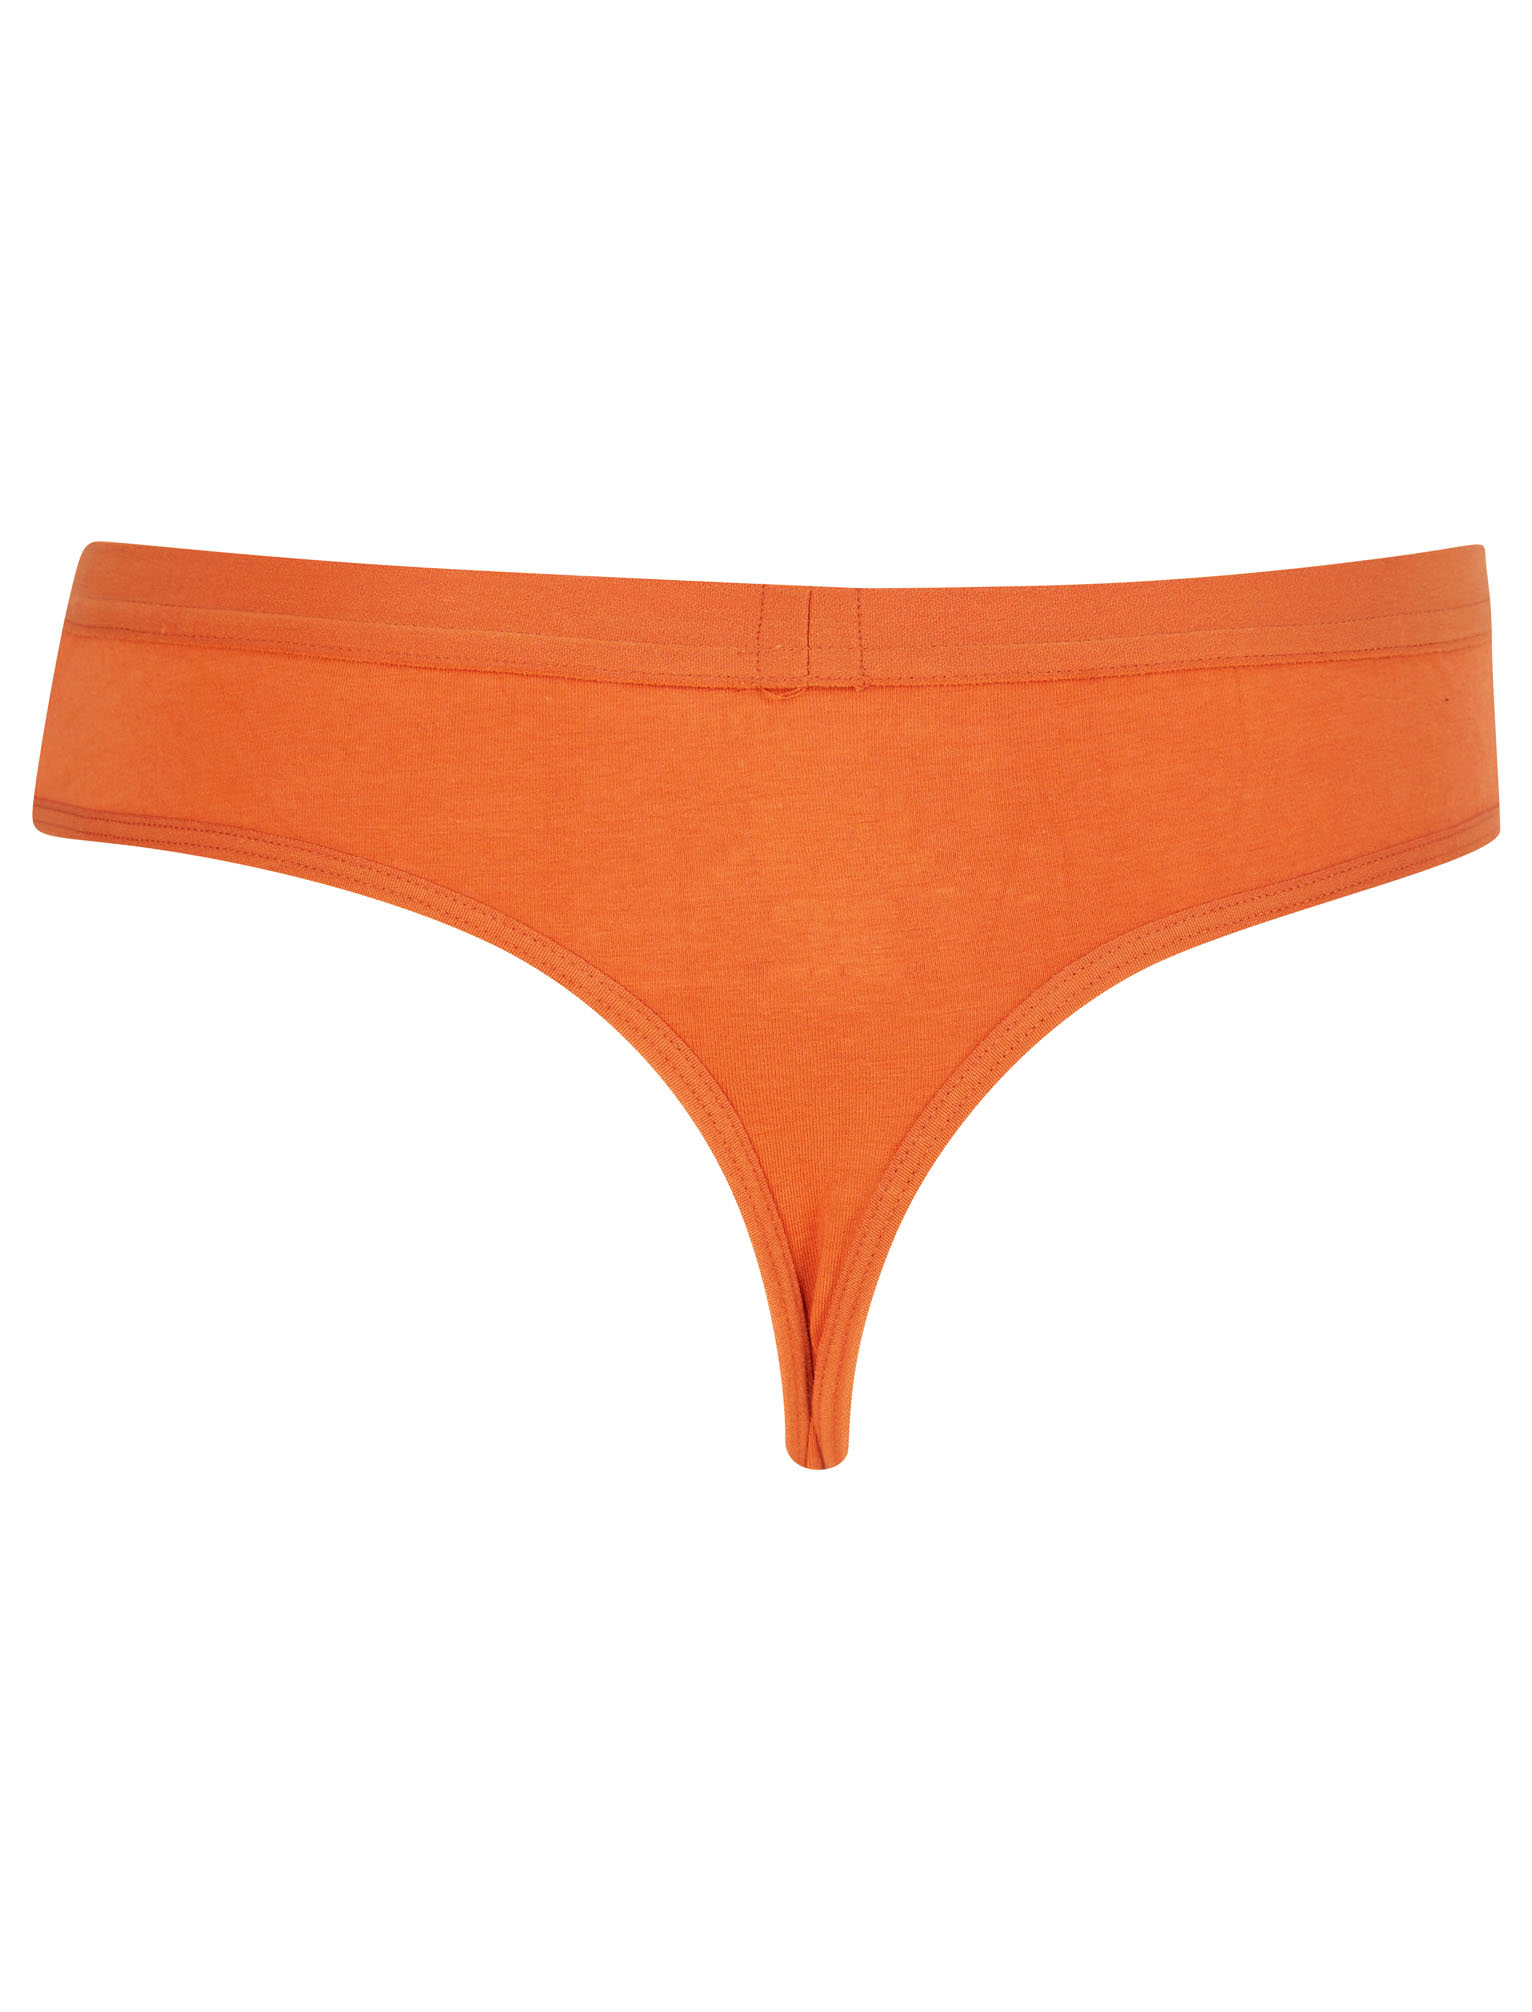 Tokyo Laundry Women's Underwear 5 Pack Briefs Knickers Thongs ...